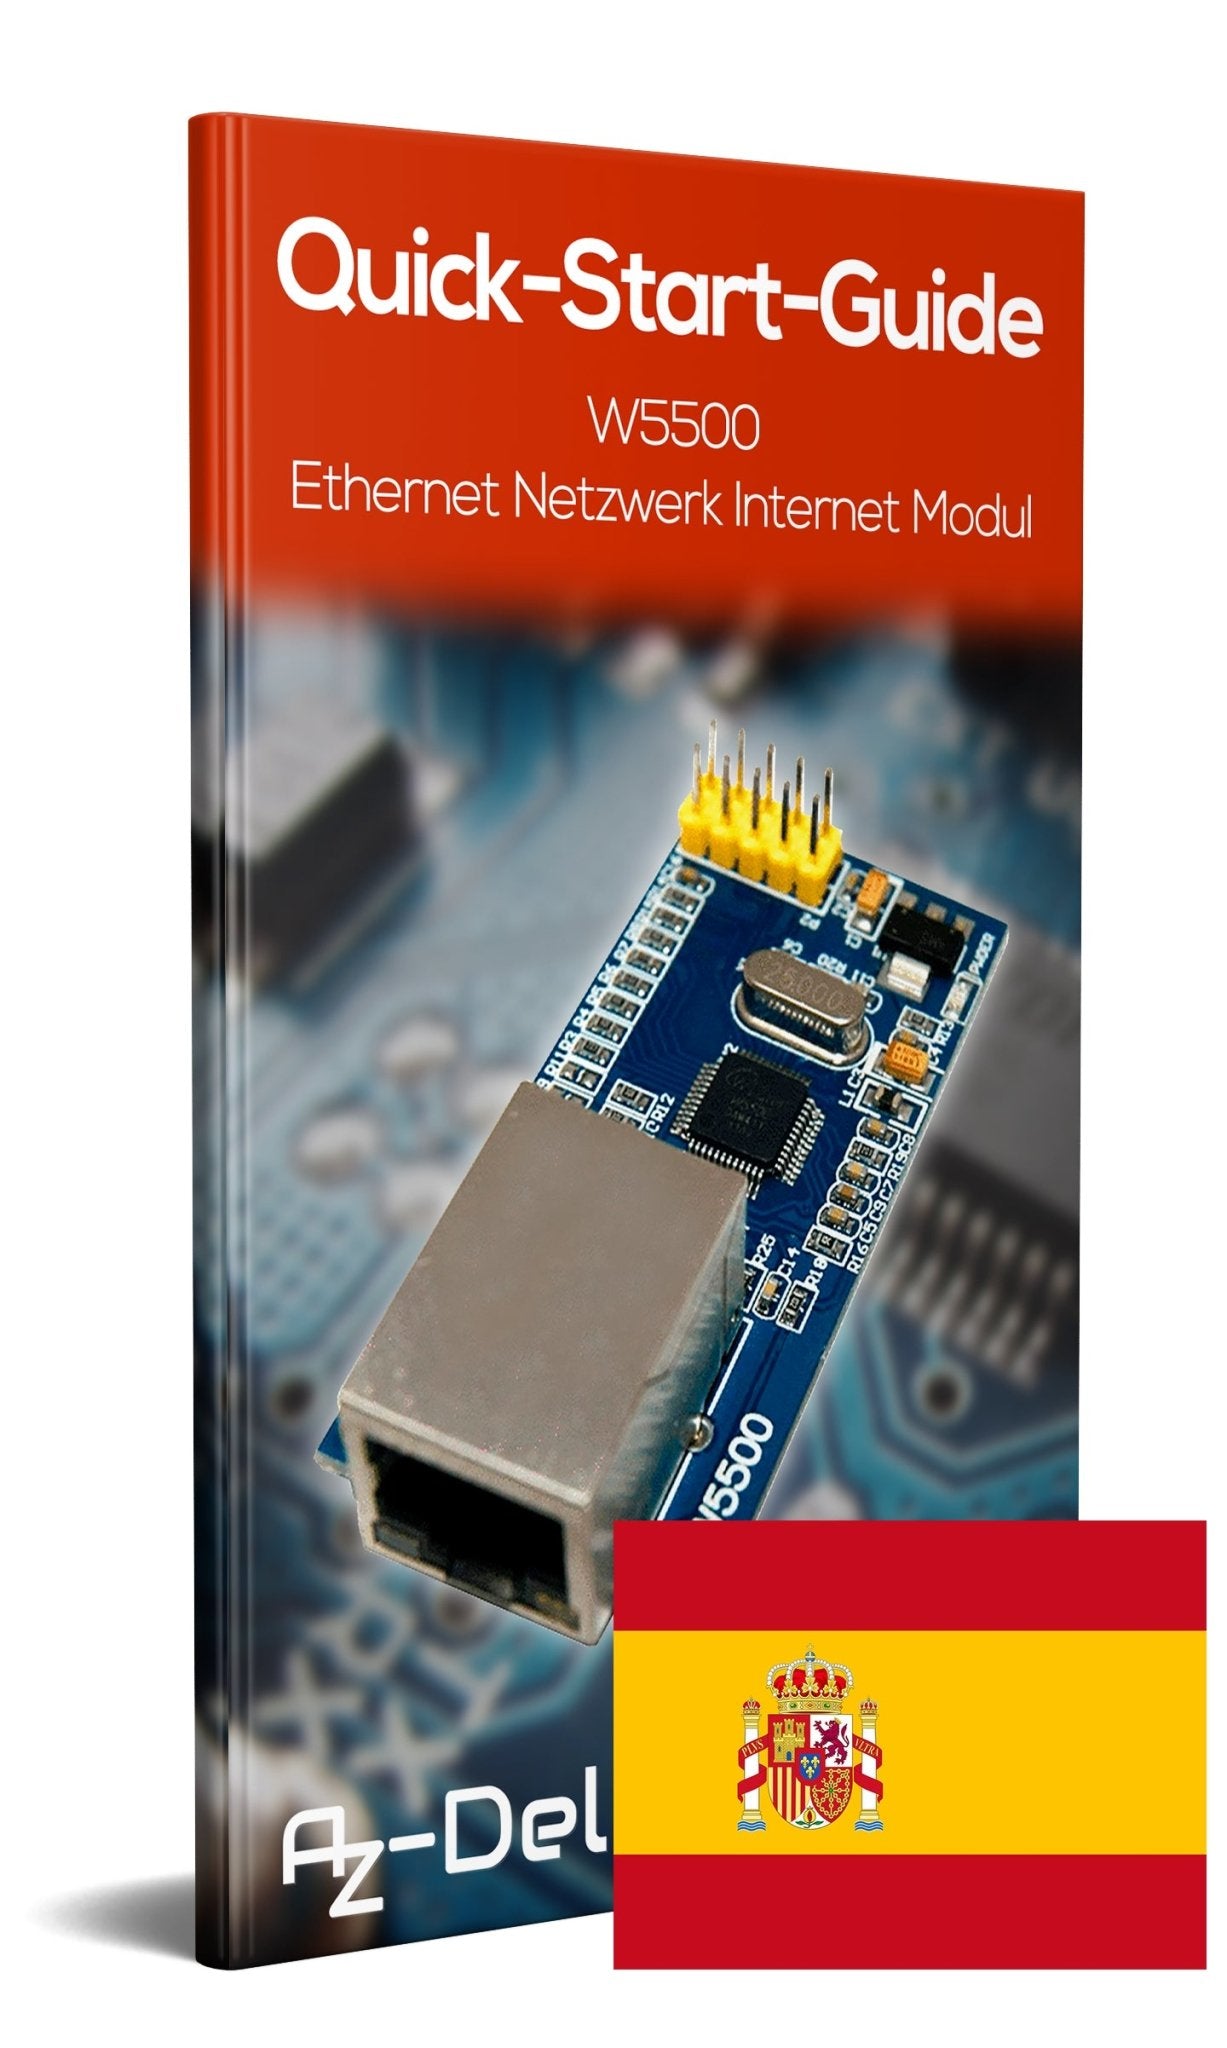 W5500 Ethernet Netzwerk Modul - AZ-Delivery